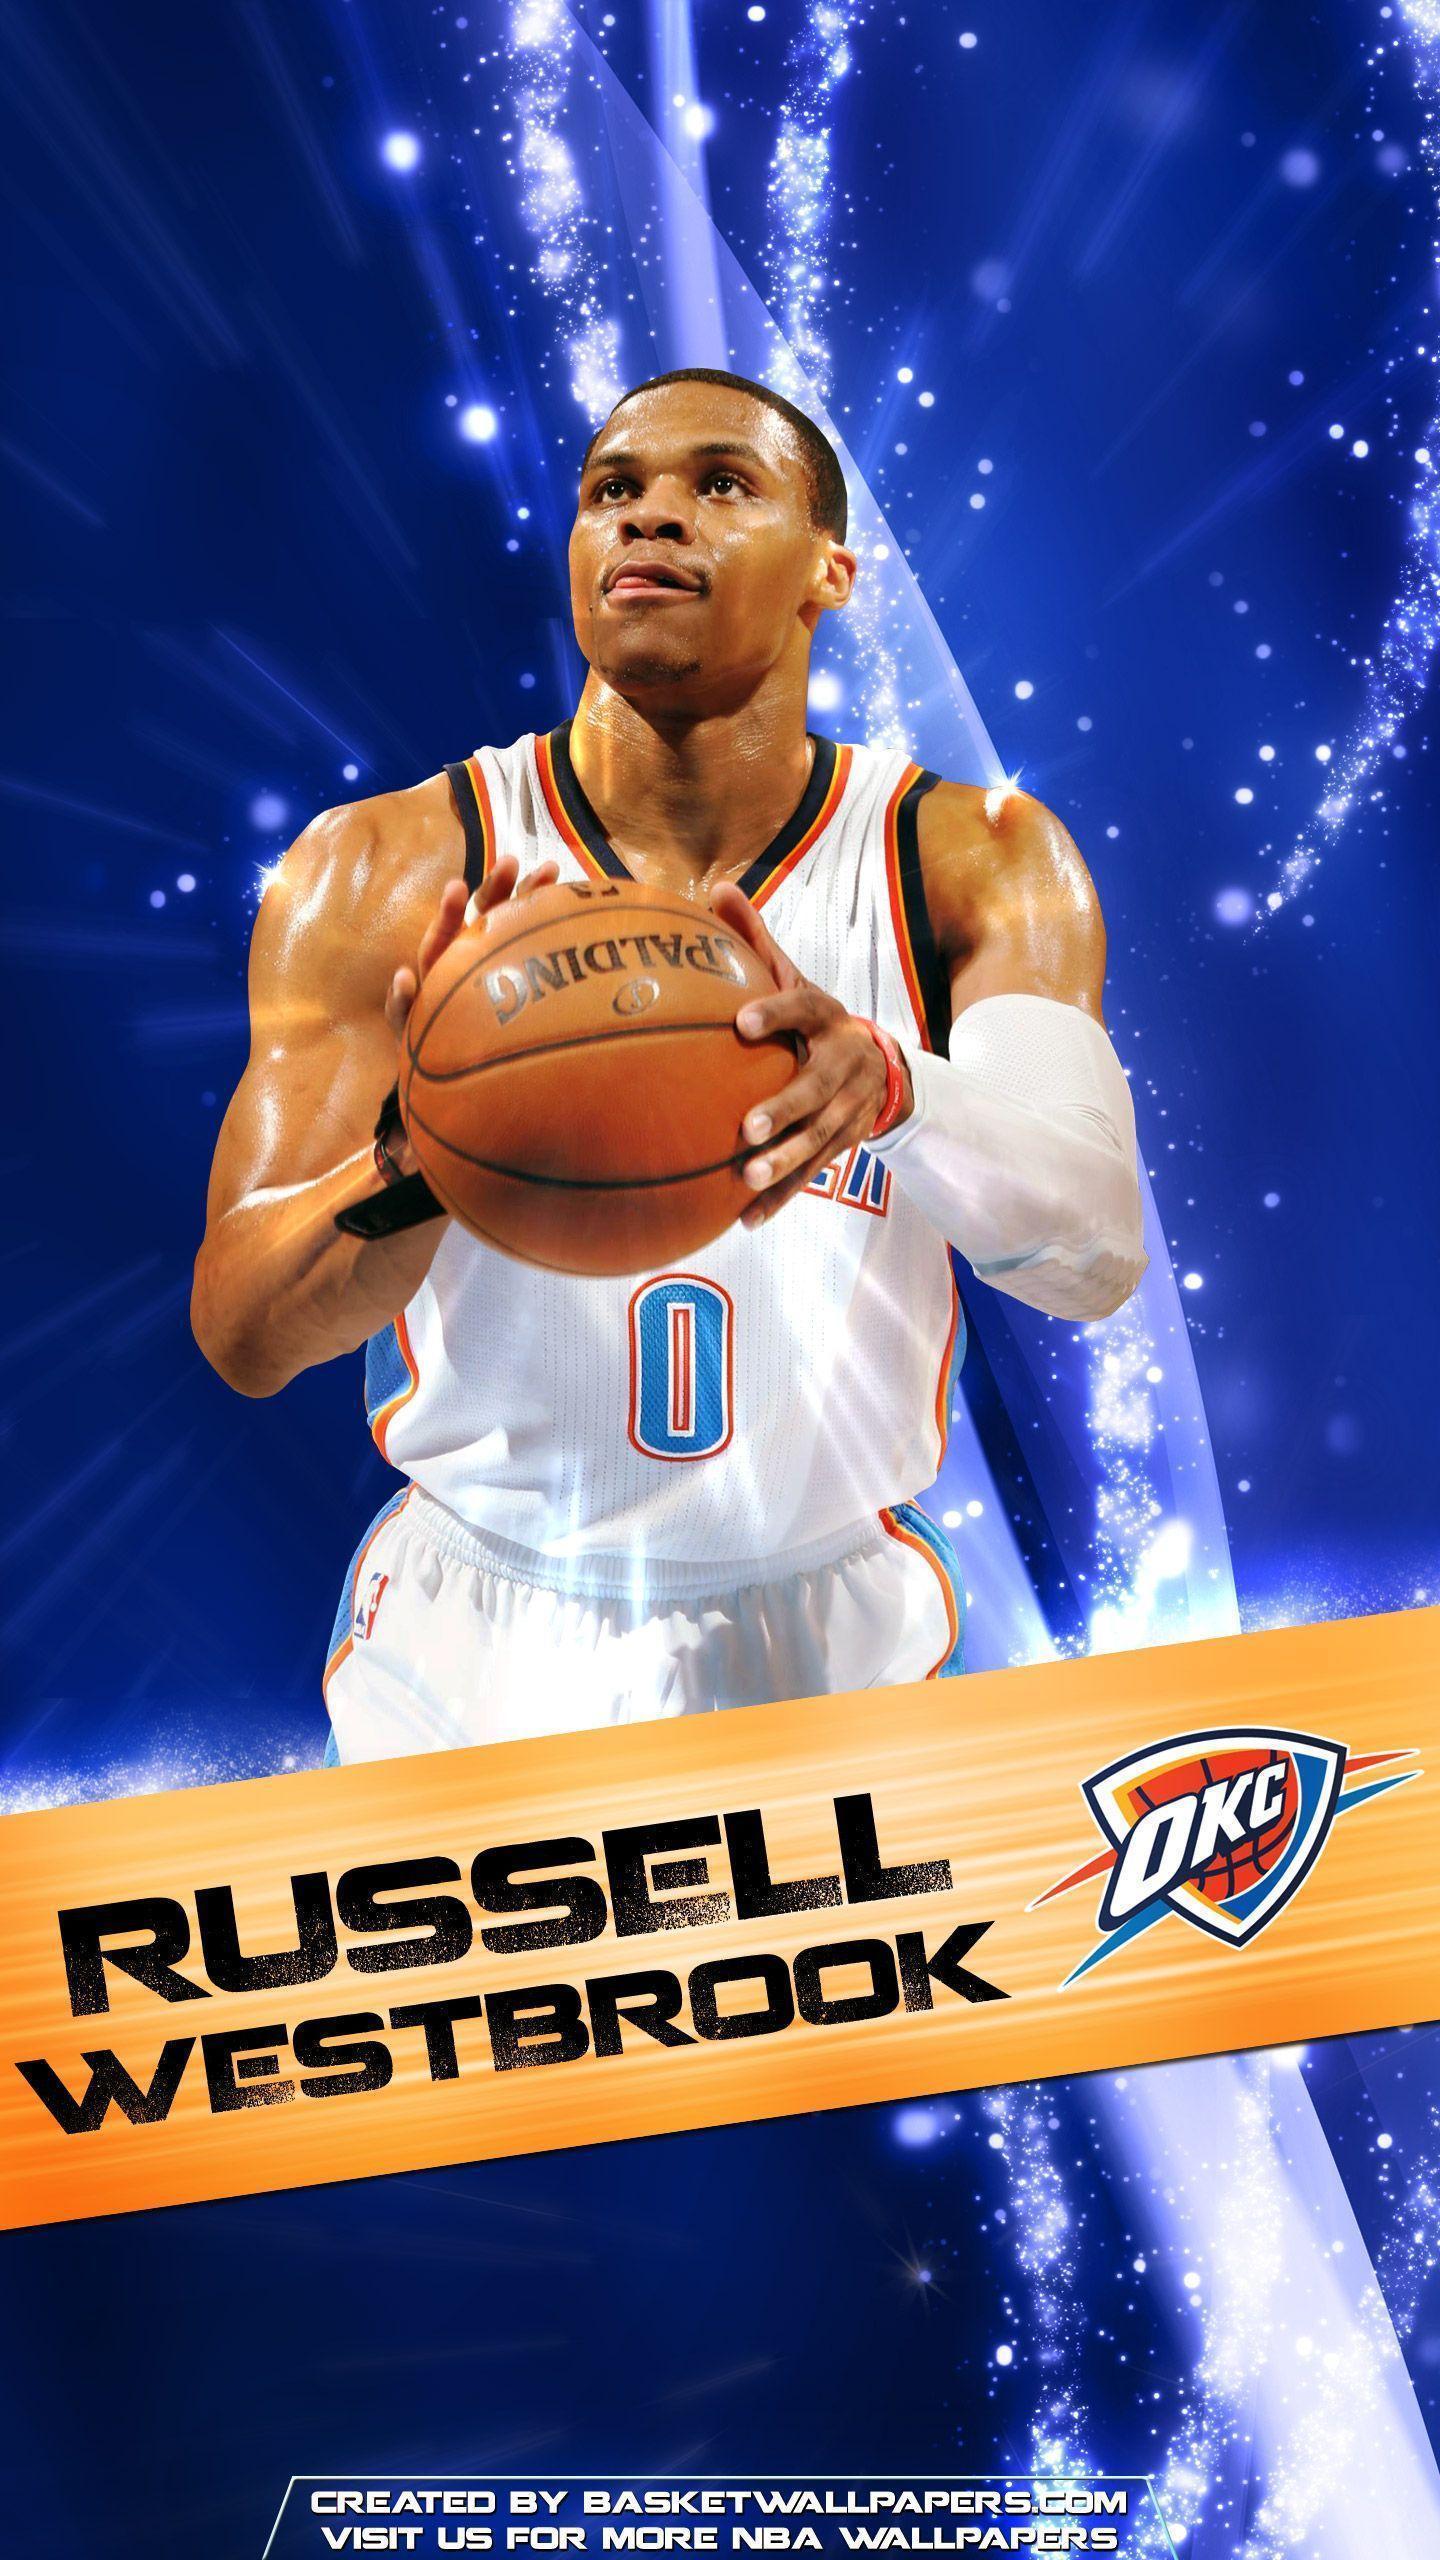 Russell Westbrook OKC Thunder 2016 Mobile Wallpaper. Basketball